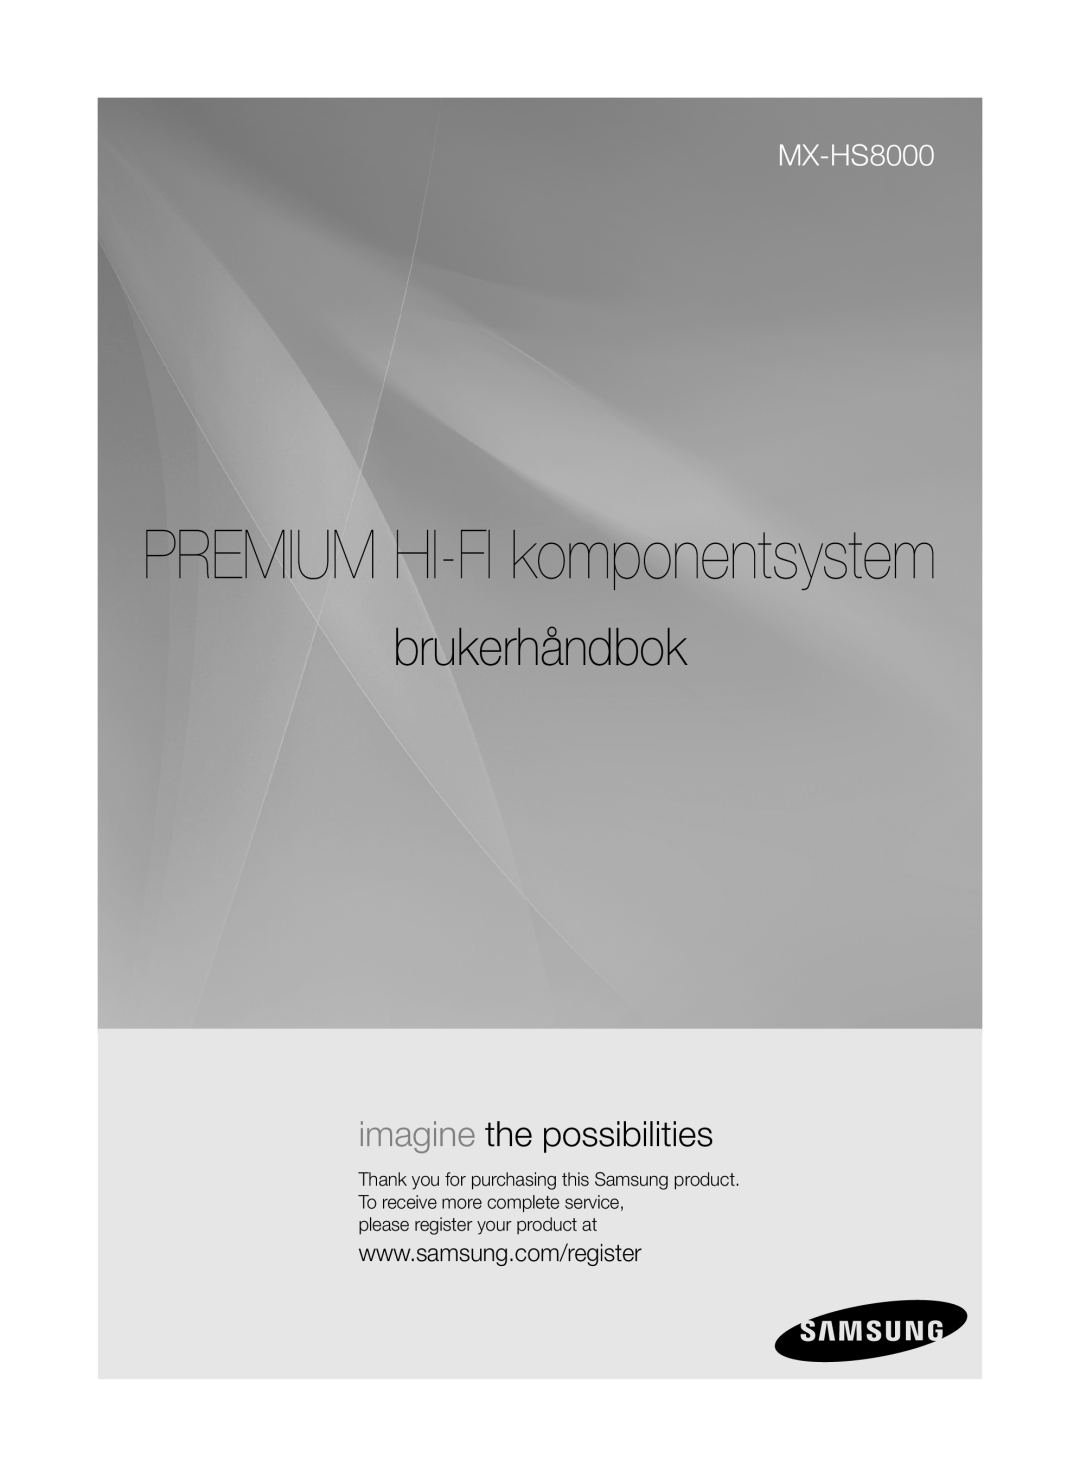 Samsung MX-HS8000/ZF, MX-HS8000/EN manual PREMIUM HI-FI komponentsystem, brukerhåndbok, imagine the possibilities 